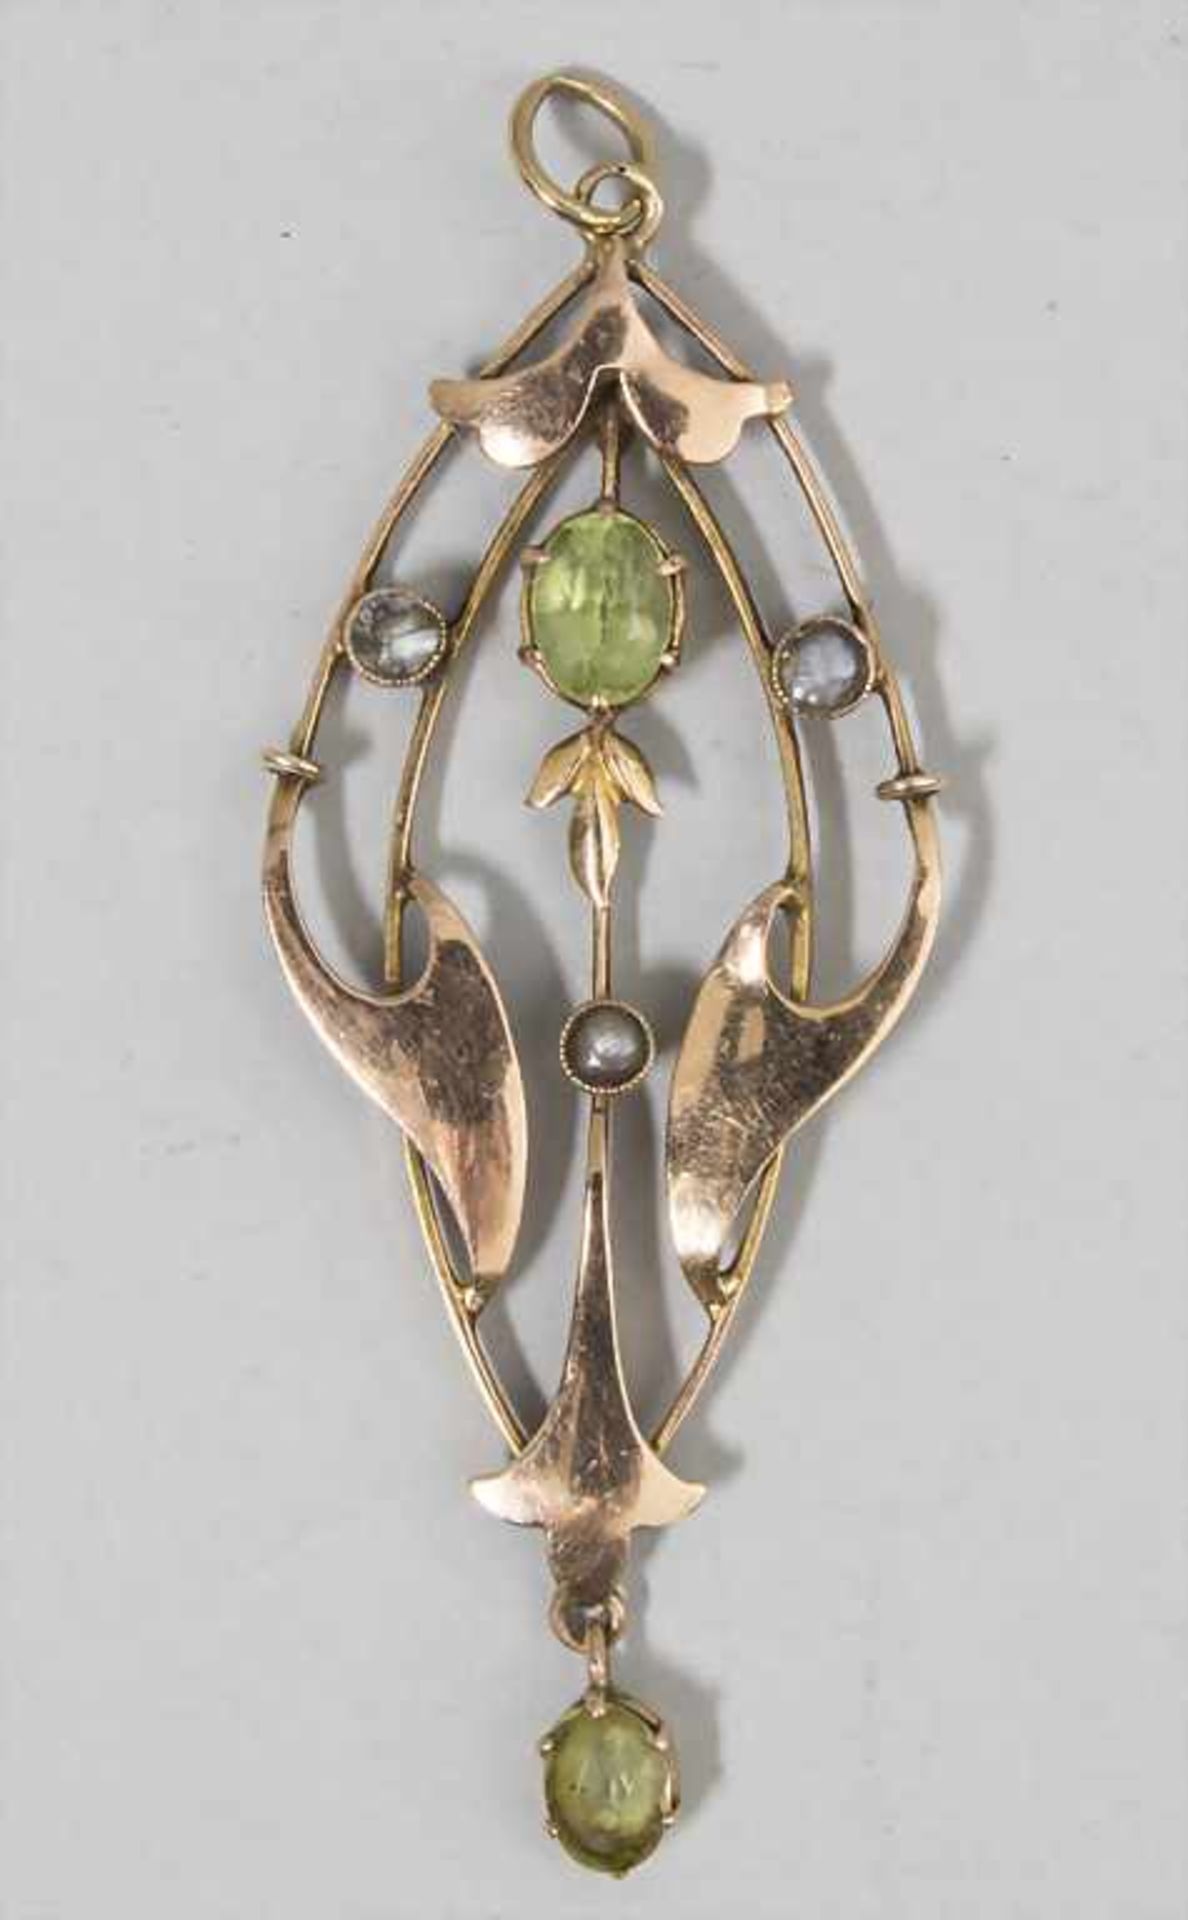 Jugendstil Anhänger / An Art Nouveau pendant, England, um 1900